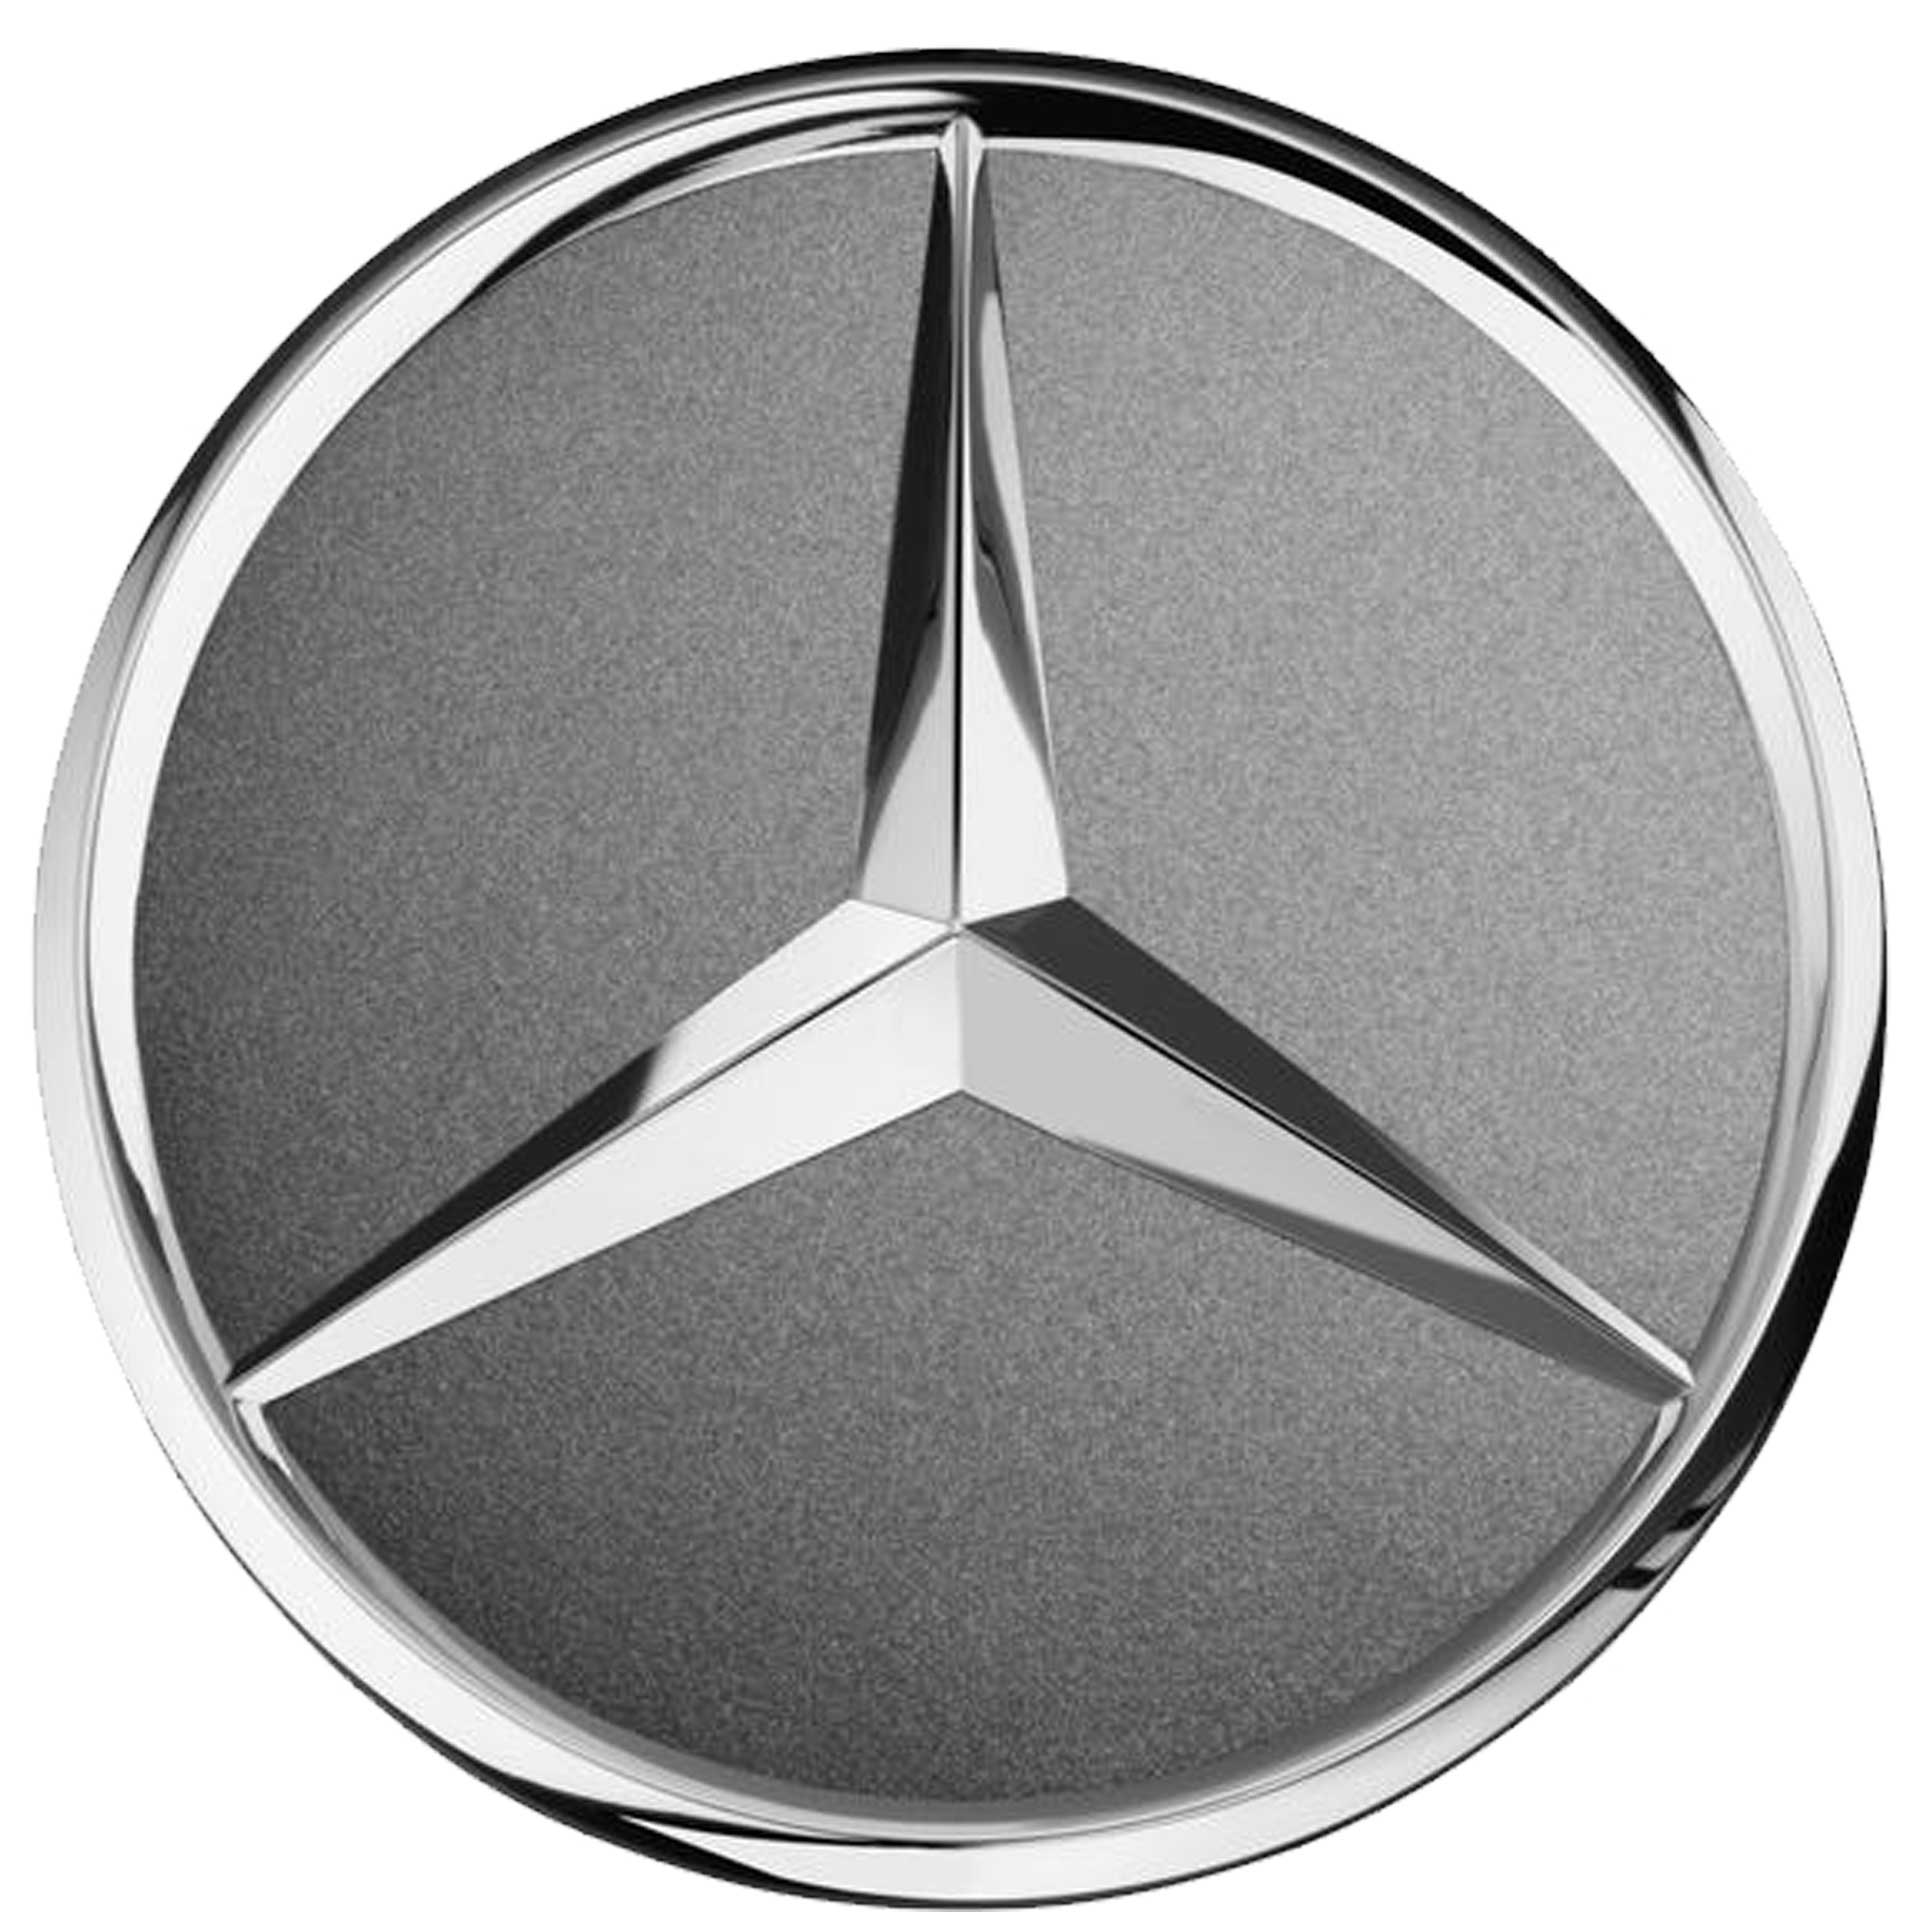 Mercedes-Benz Radnabenabdeckung Stern grau Himalaya